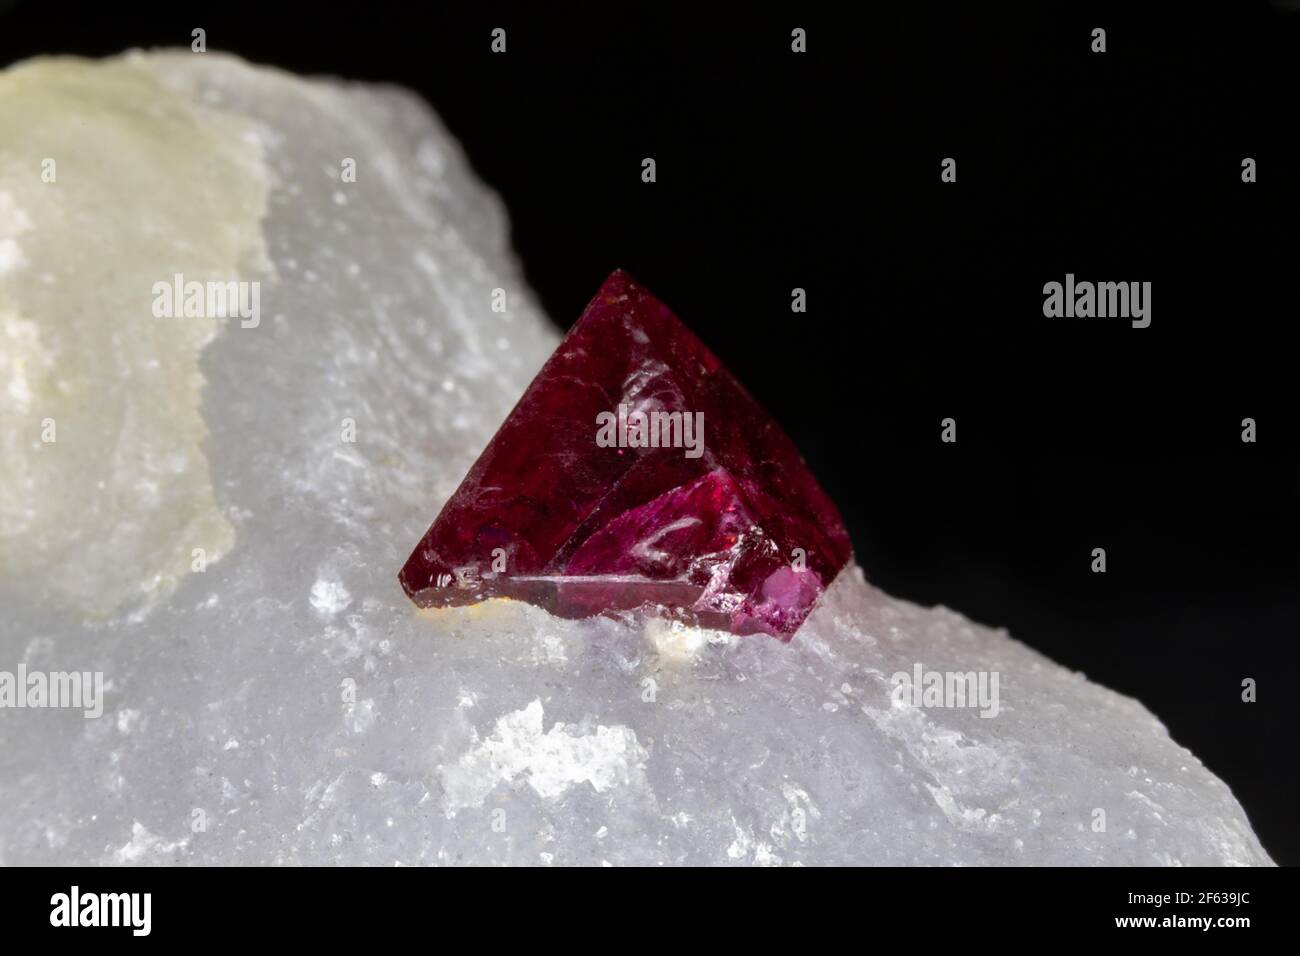 Red spinel crystal, uncut, still set in white host rock matrix. From Mogok region, Myanmar. Black background. Stock Photo